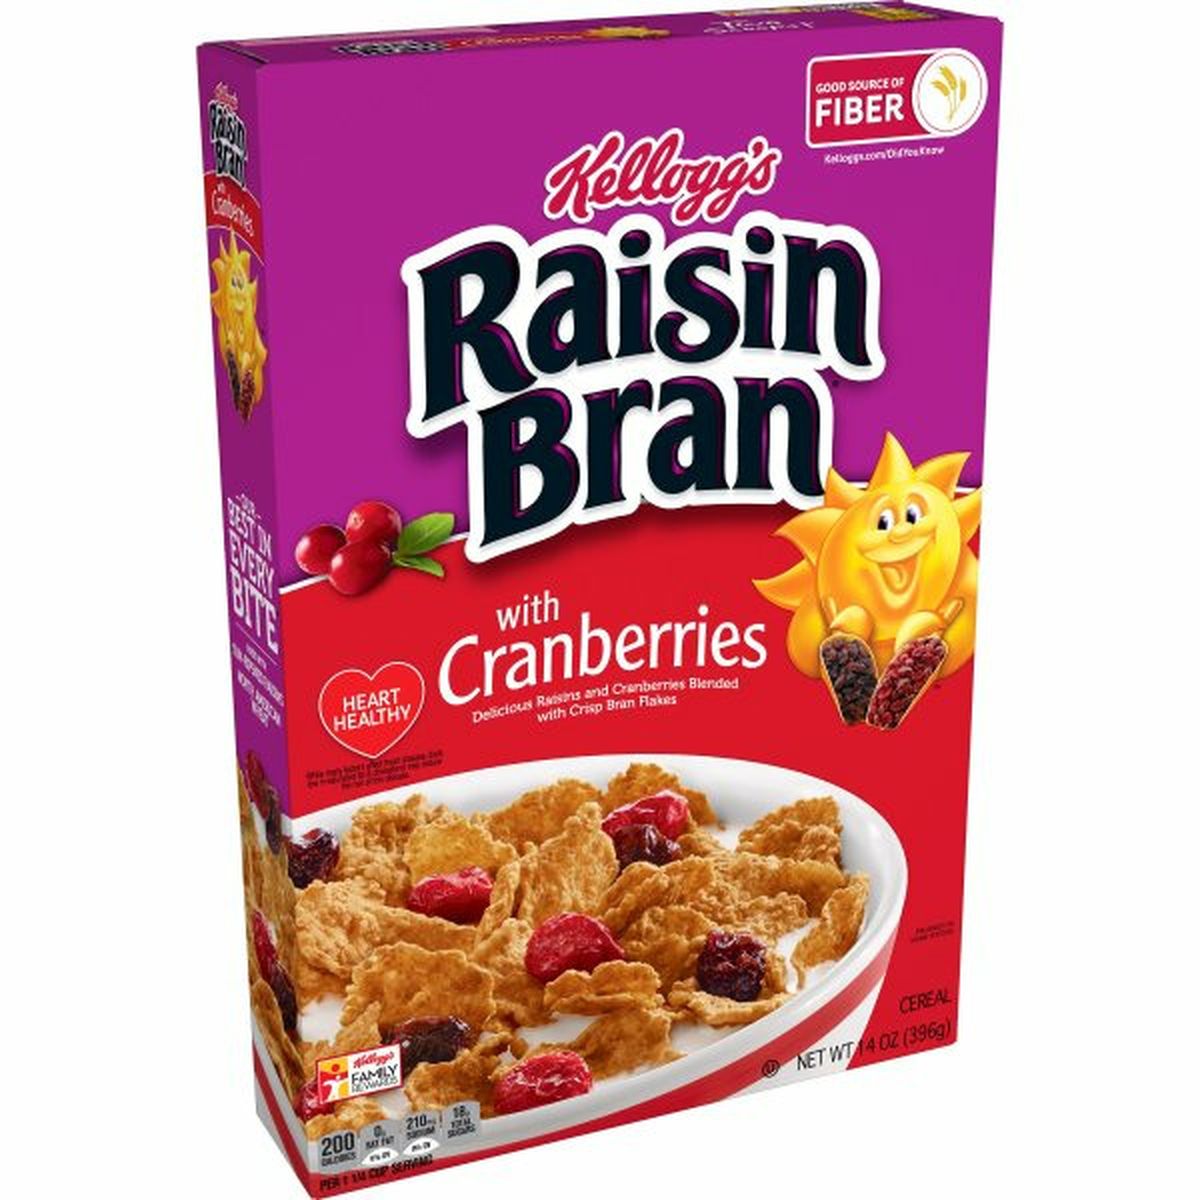 Calories in Kellogg's Raisin Bran Cereal Kellogg's Raisin Bran Breakfast Cereal, Original with Cranberries, Good Source of Fiber, 14oz